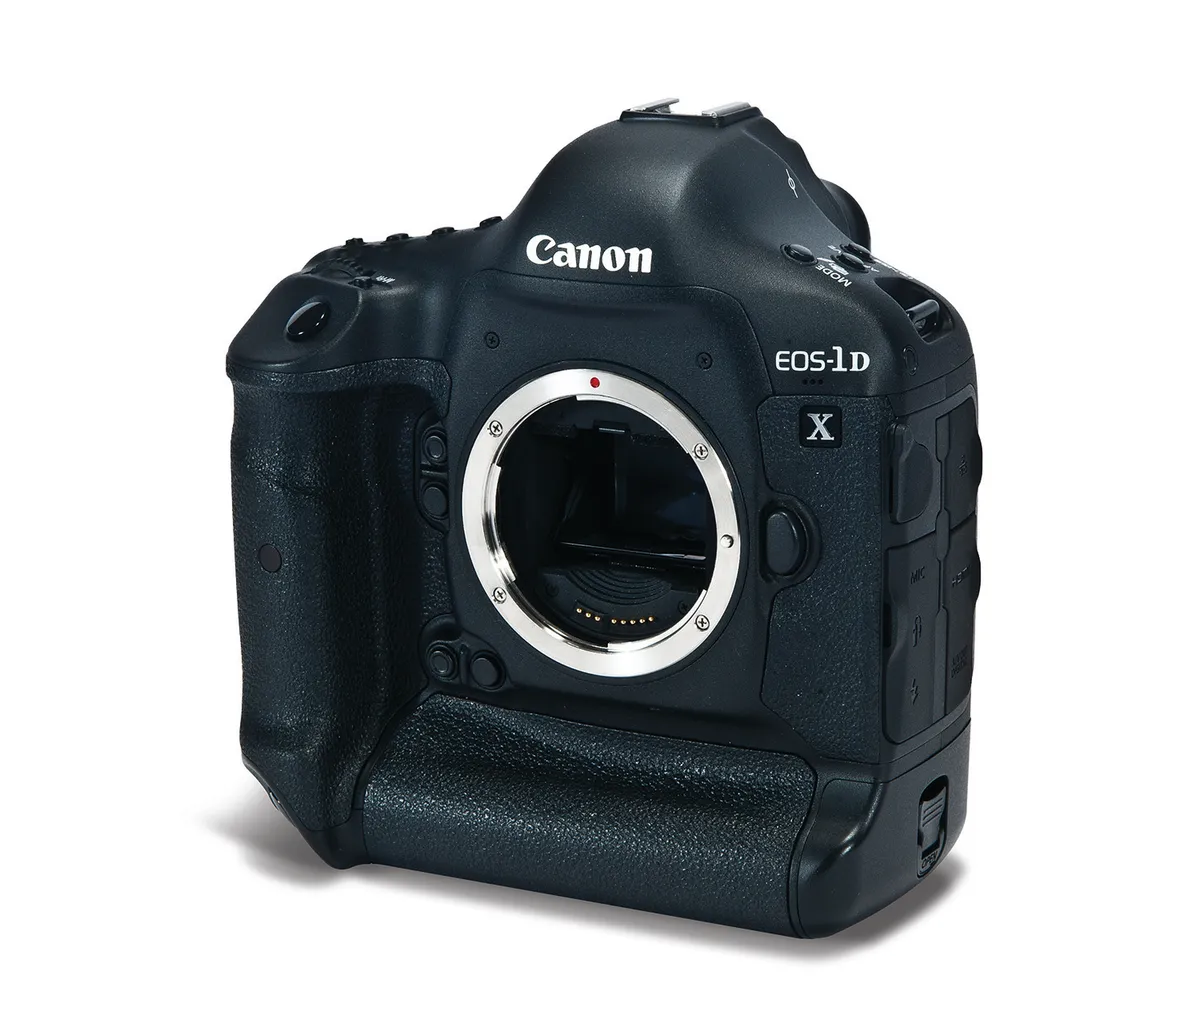 Canon EOS-1D X DSLR camera review